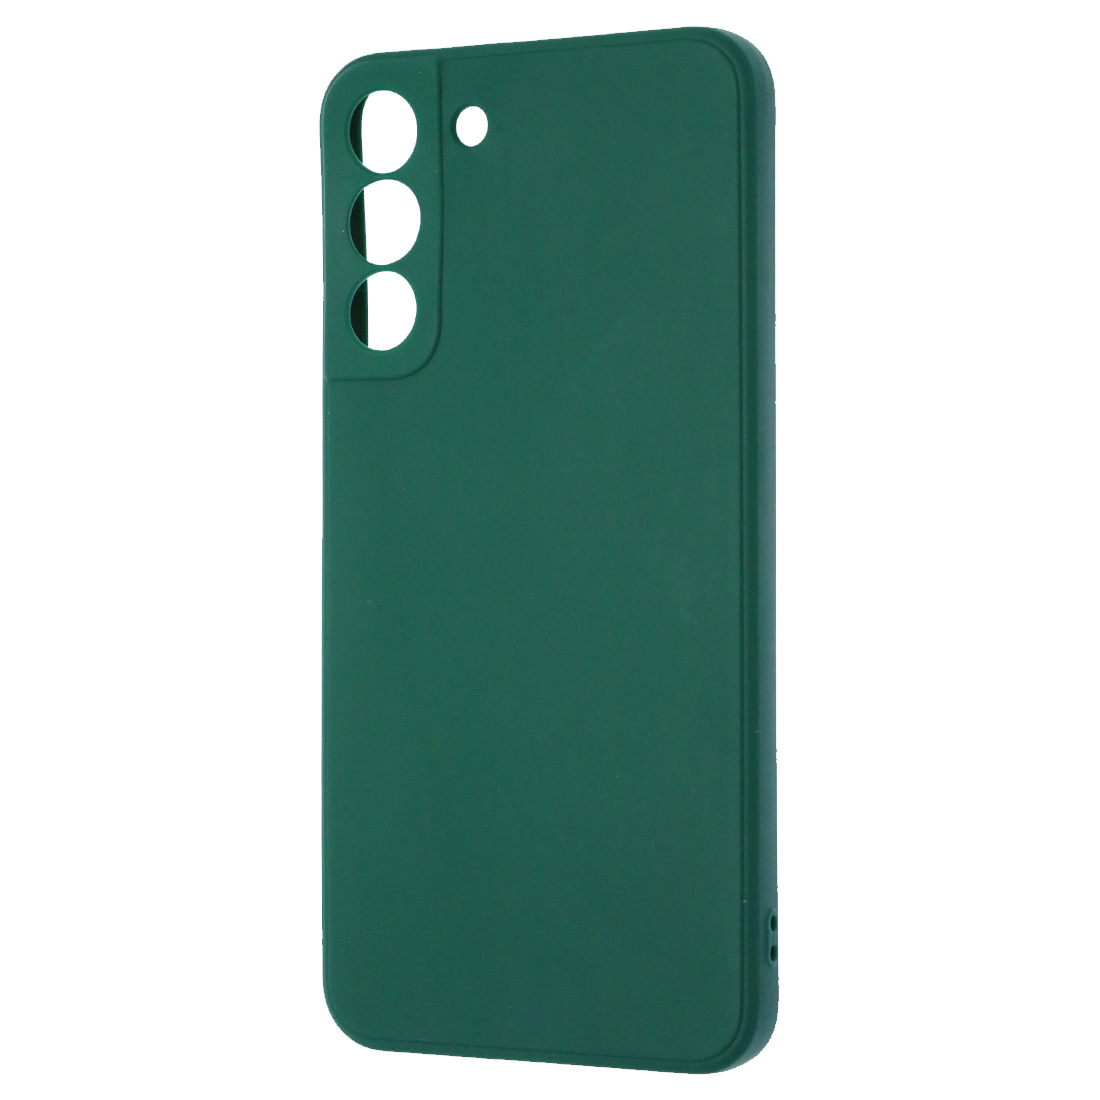 Чехол накладка для SAMSUNG Galaxy S22 Plus, силикон, бархат, цвет темно зеленый